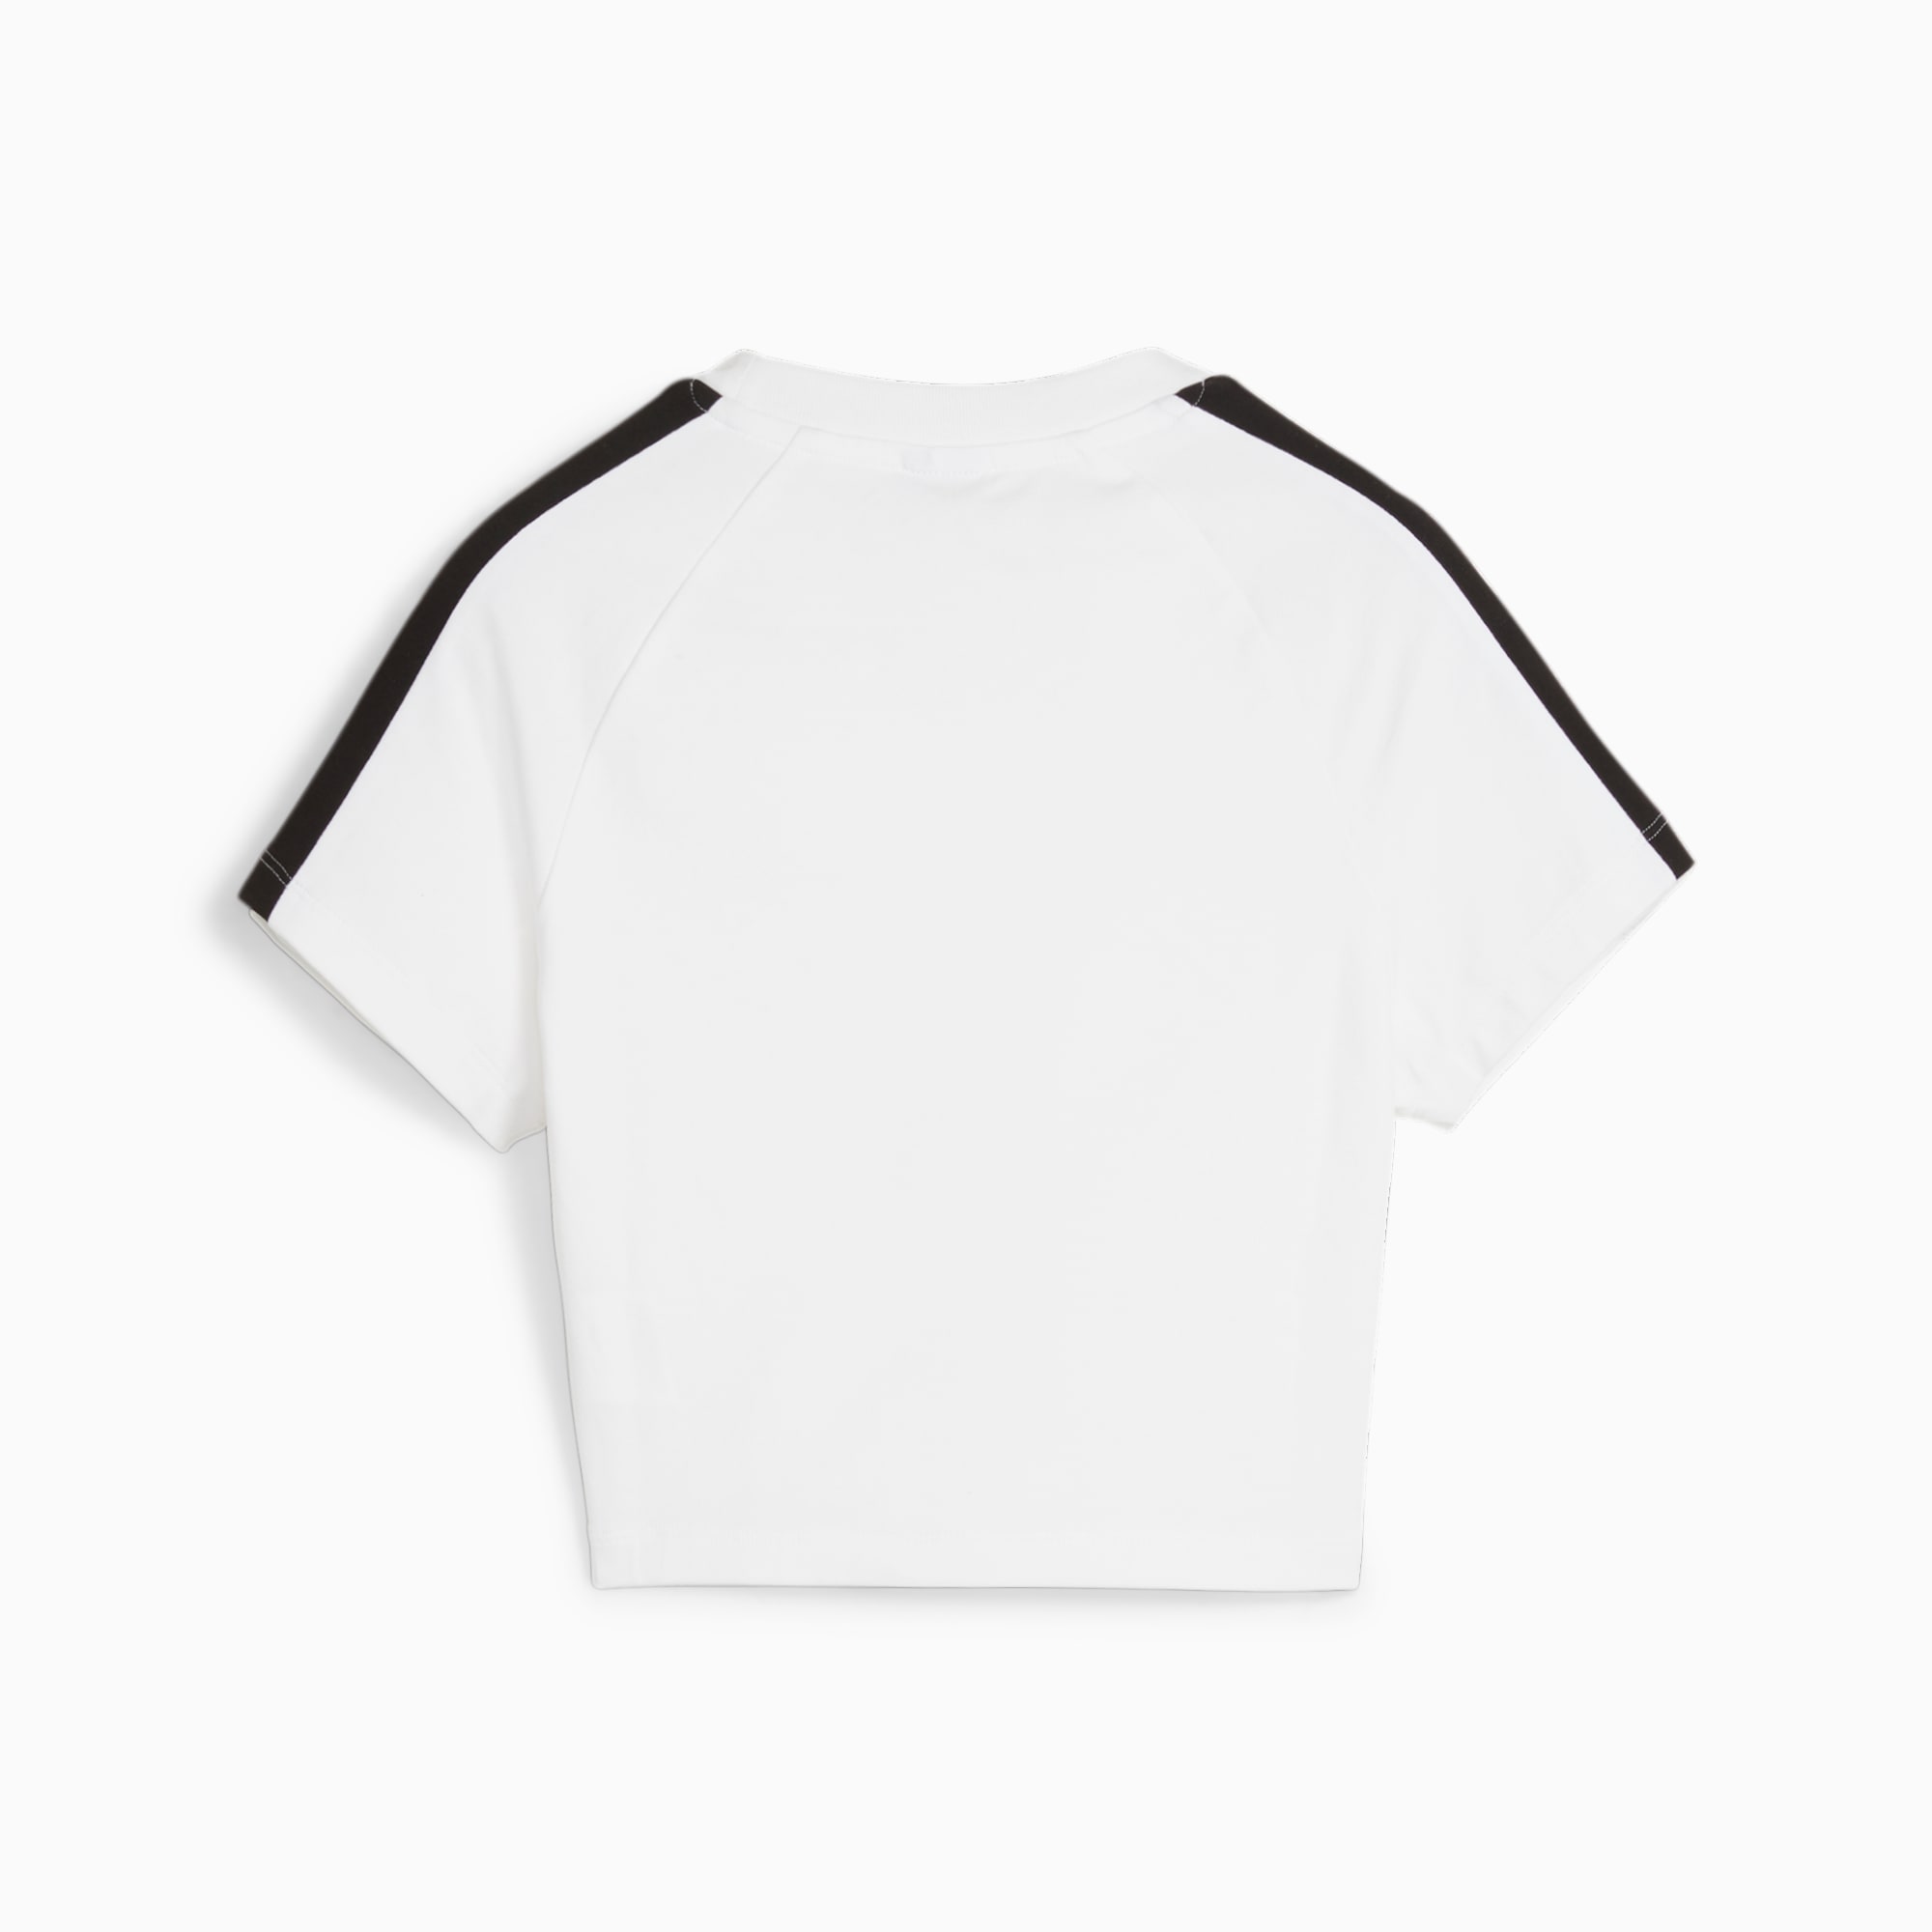 PUMA Iconic T7 Women's Baby T-Shirt, White, Size XL, Clothing